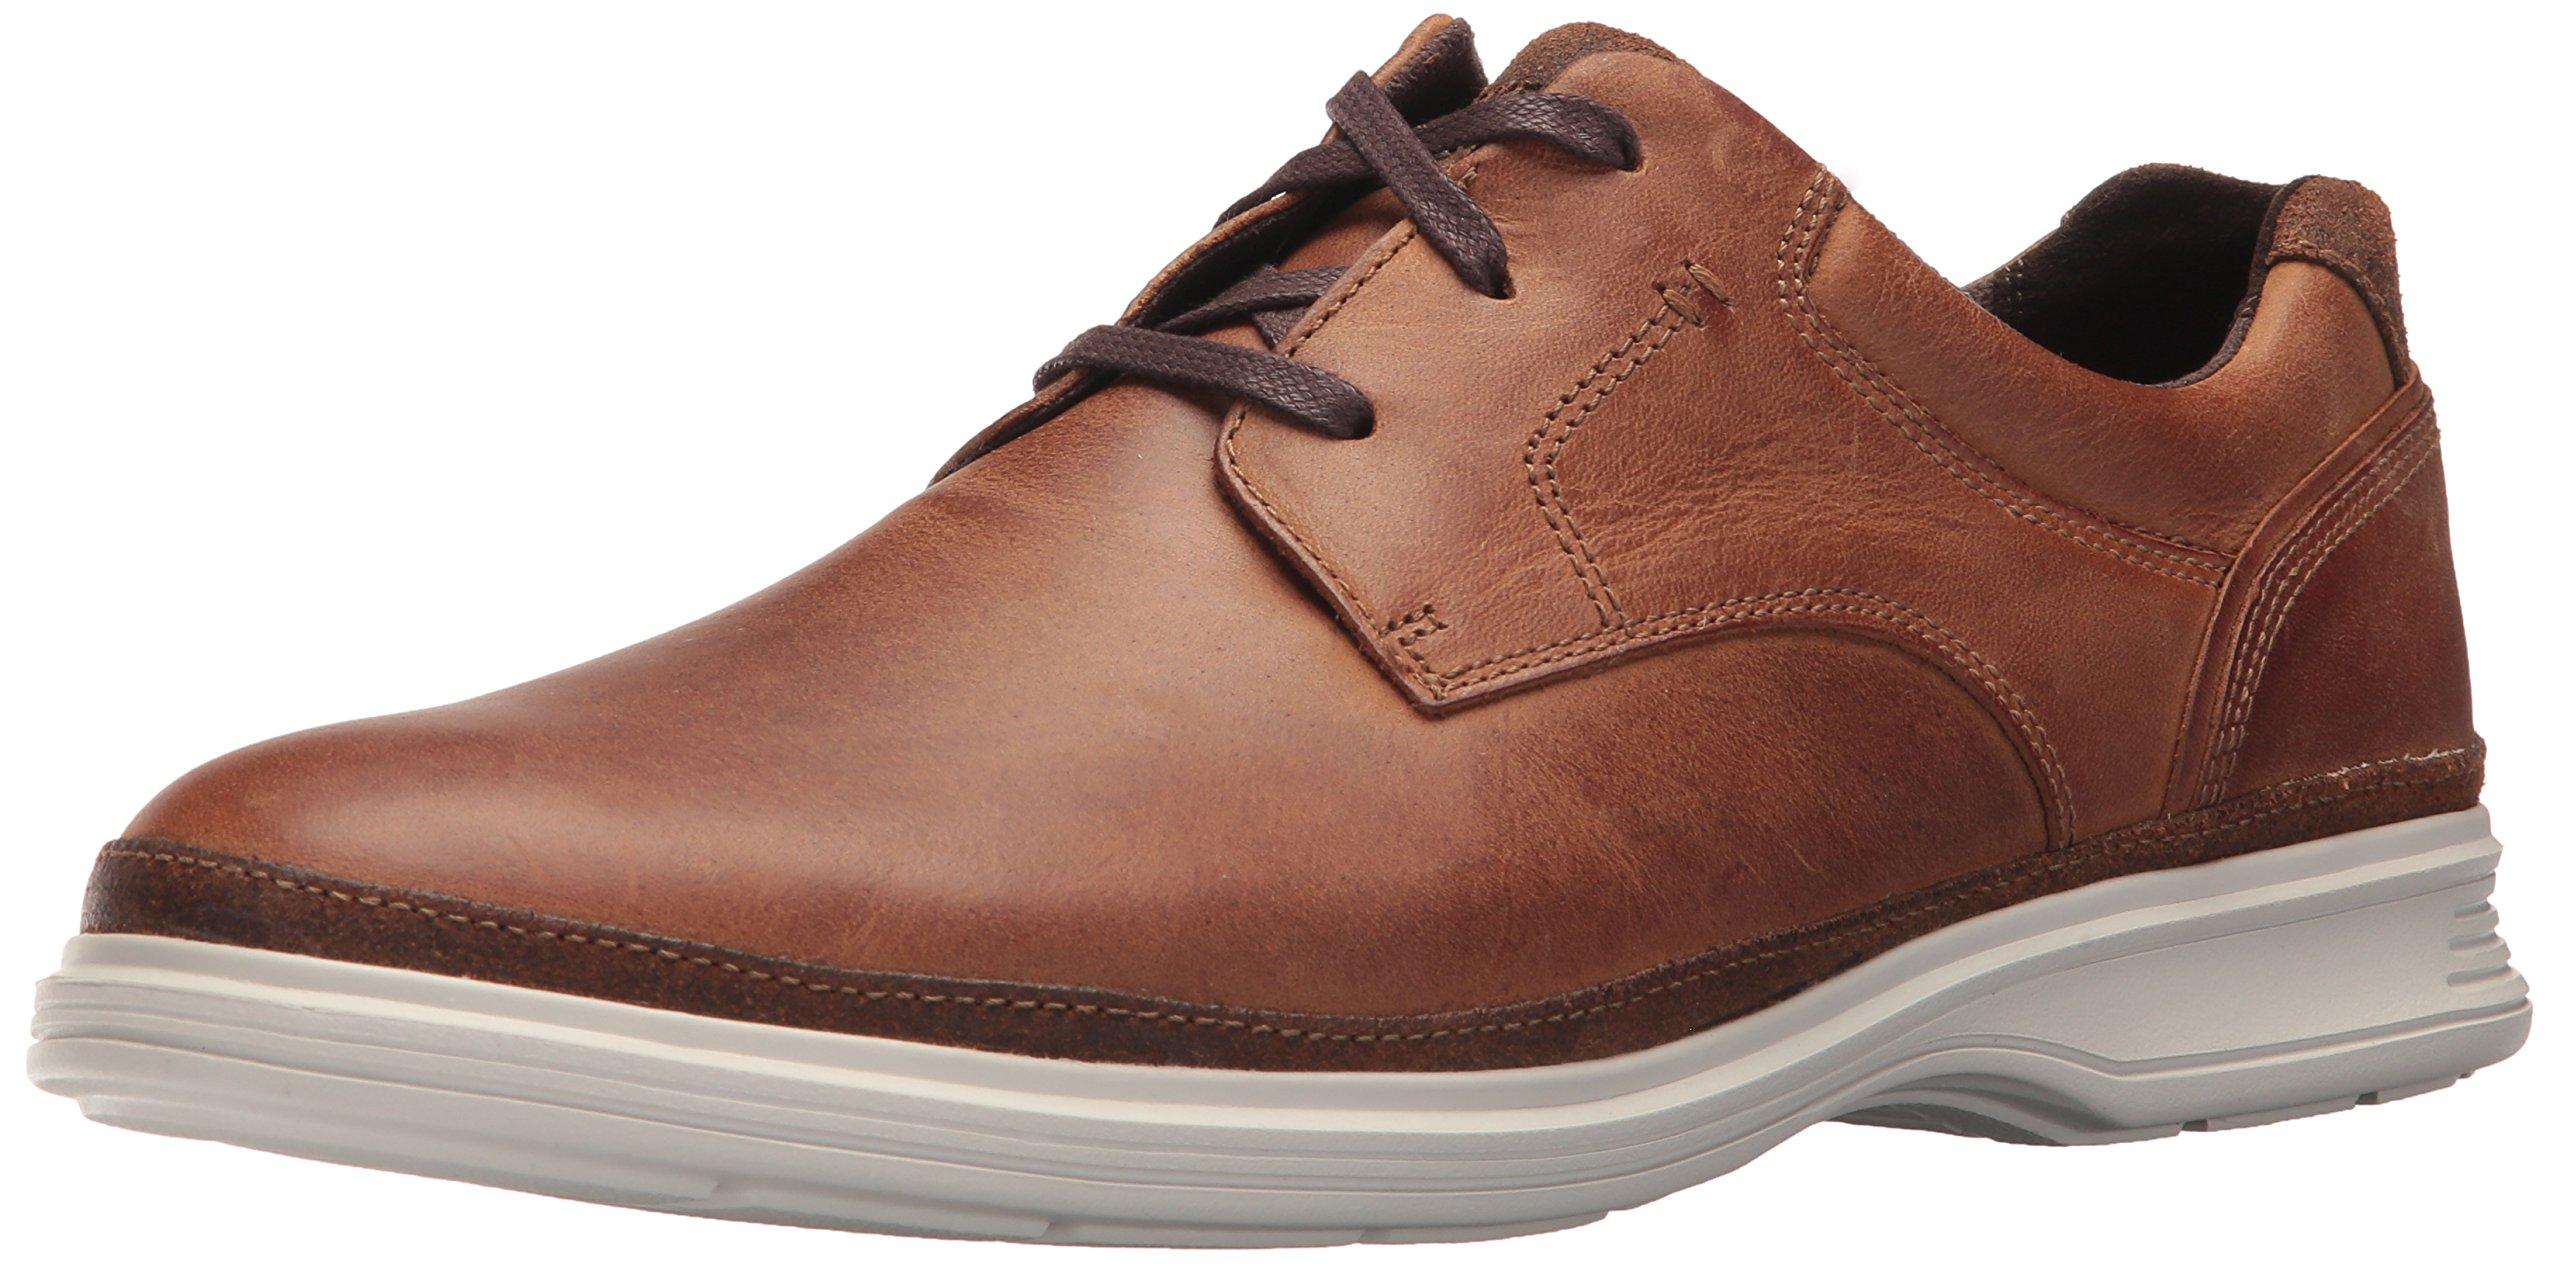 Rockport Dressports 2 Go Plain Toe Shoe in Brown for Men - Lyst